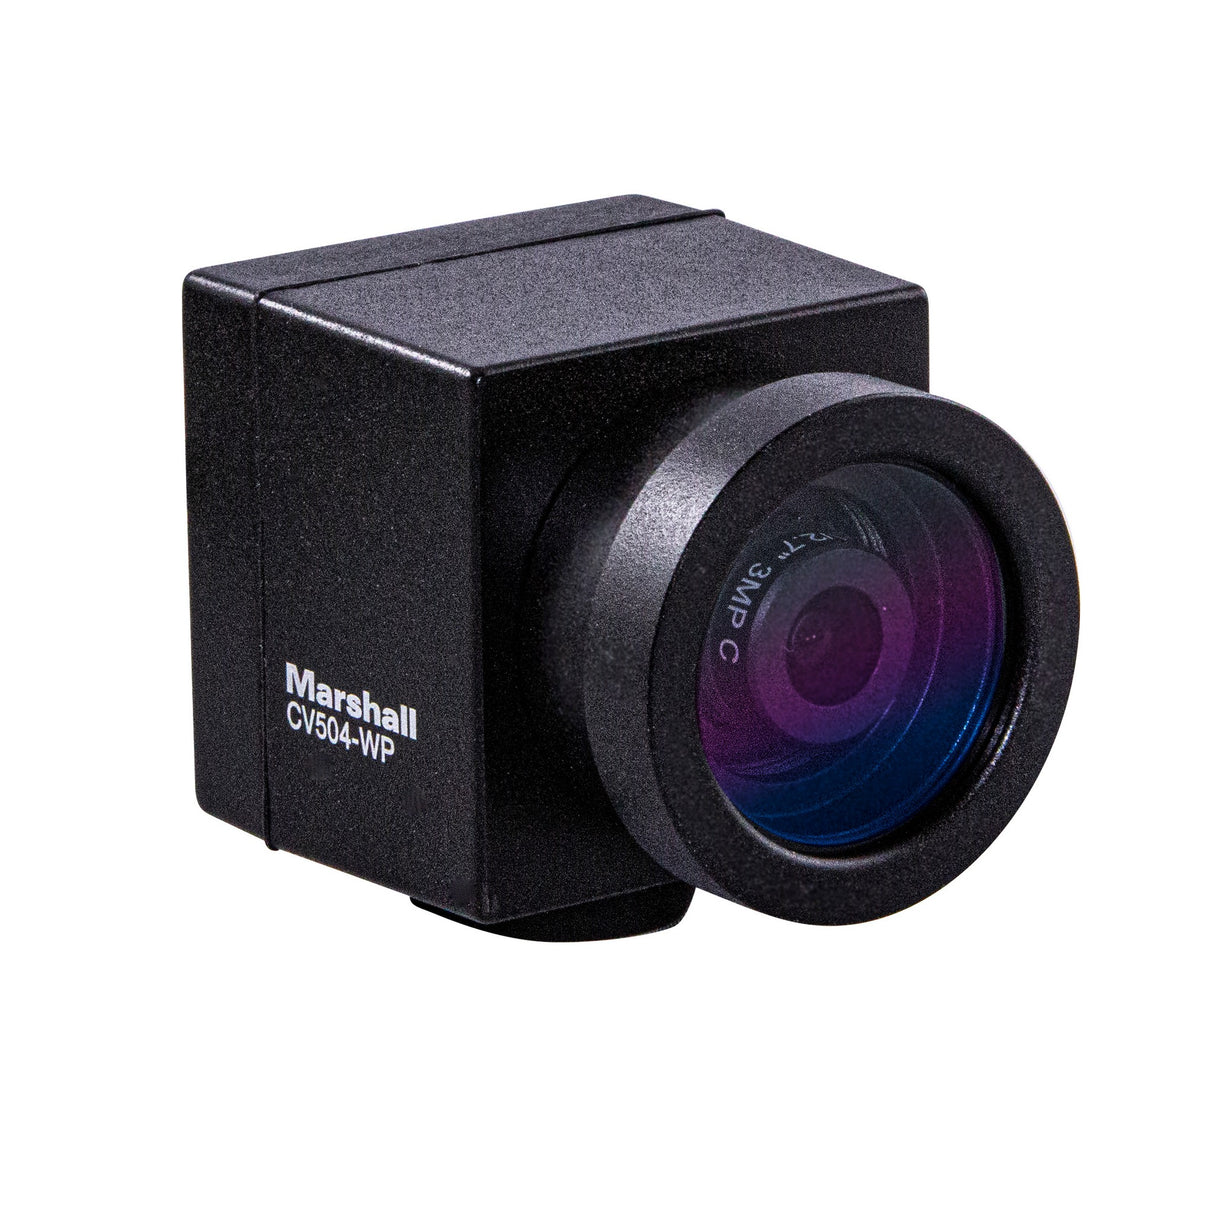 Marshall Electronics CV504-WP All-Weather 3GSDI Micro POV Camera